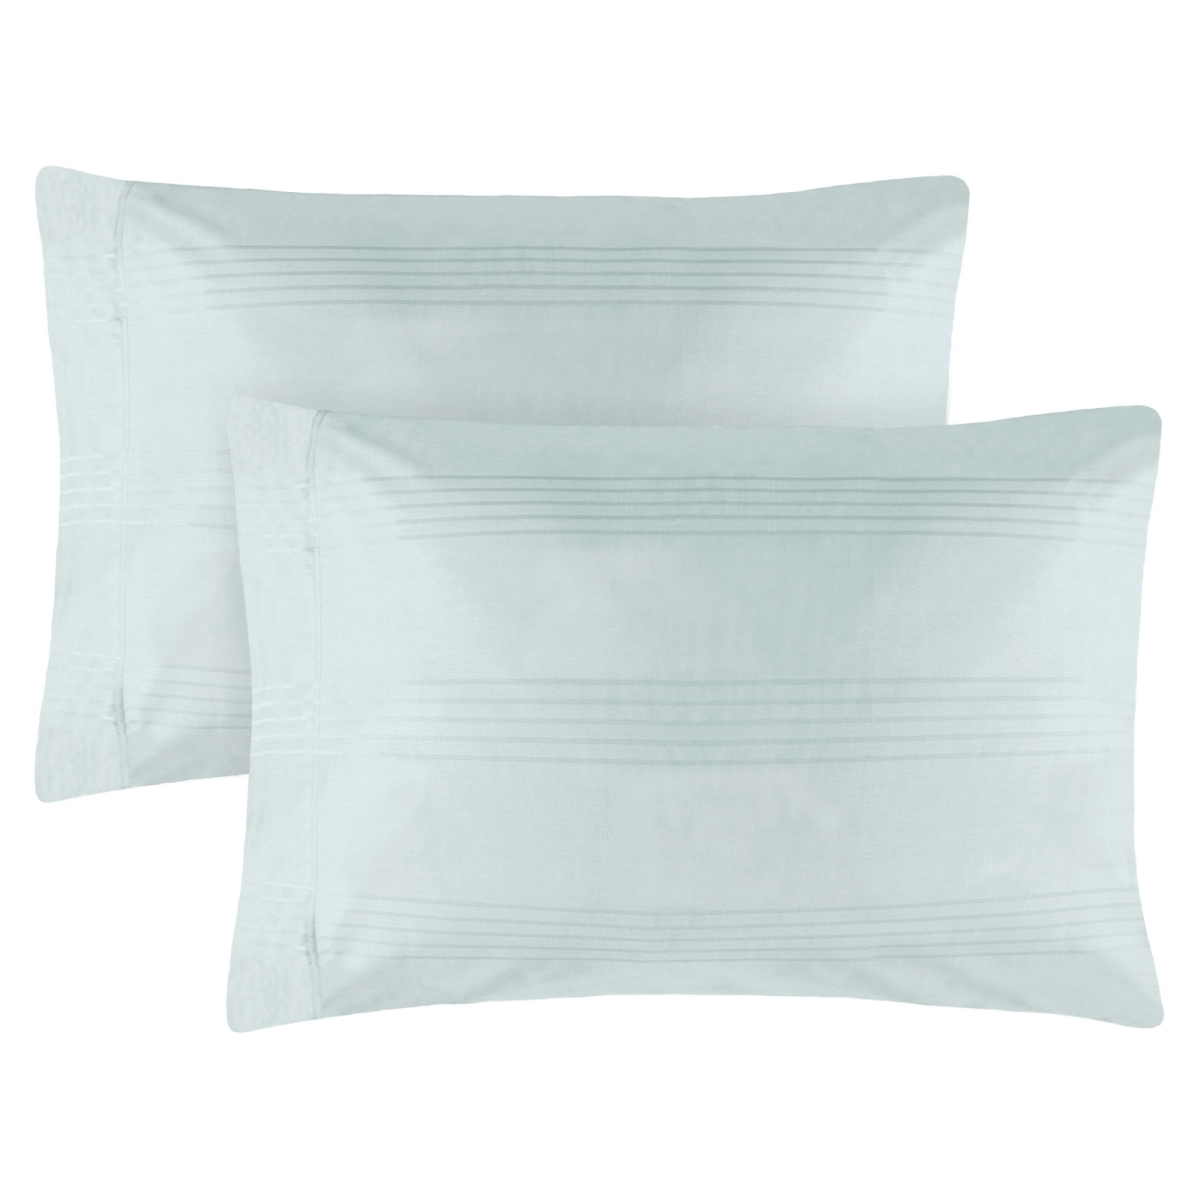 Yms008224 Premium 420 Thread Count 100 Percent Cotton Pillowcase Set, Spa Blue - King - 2 Piece